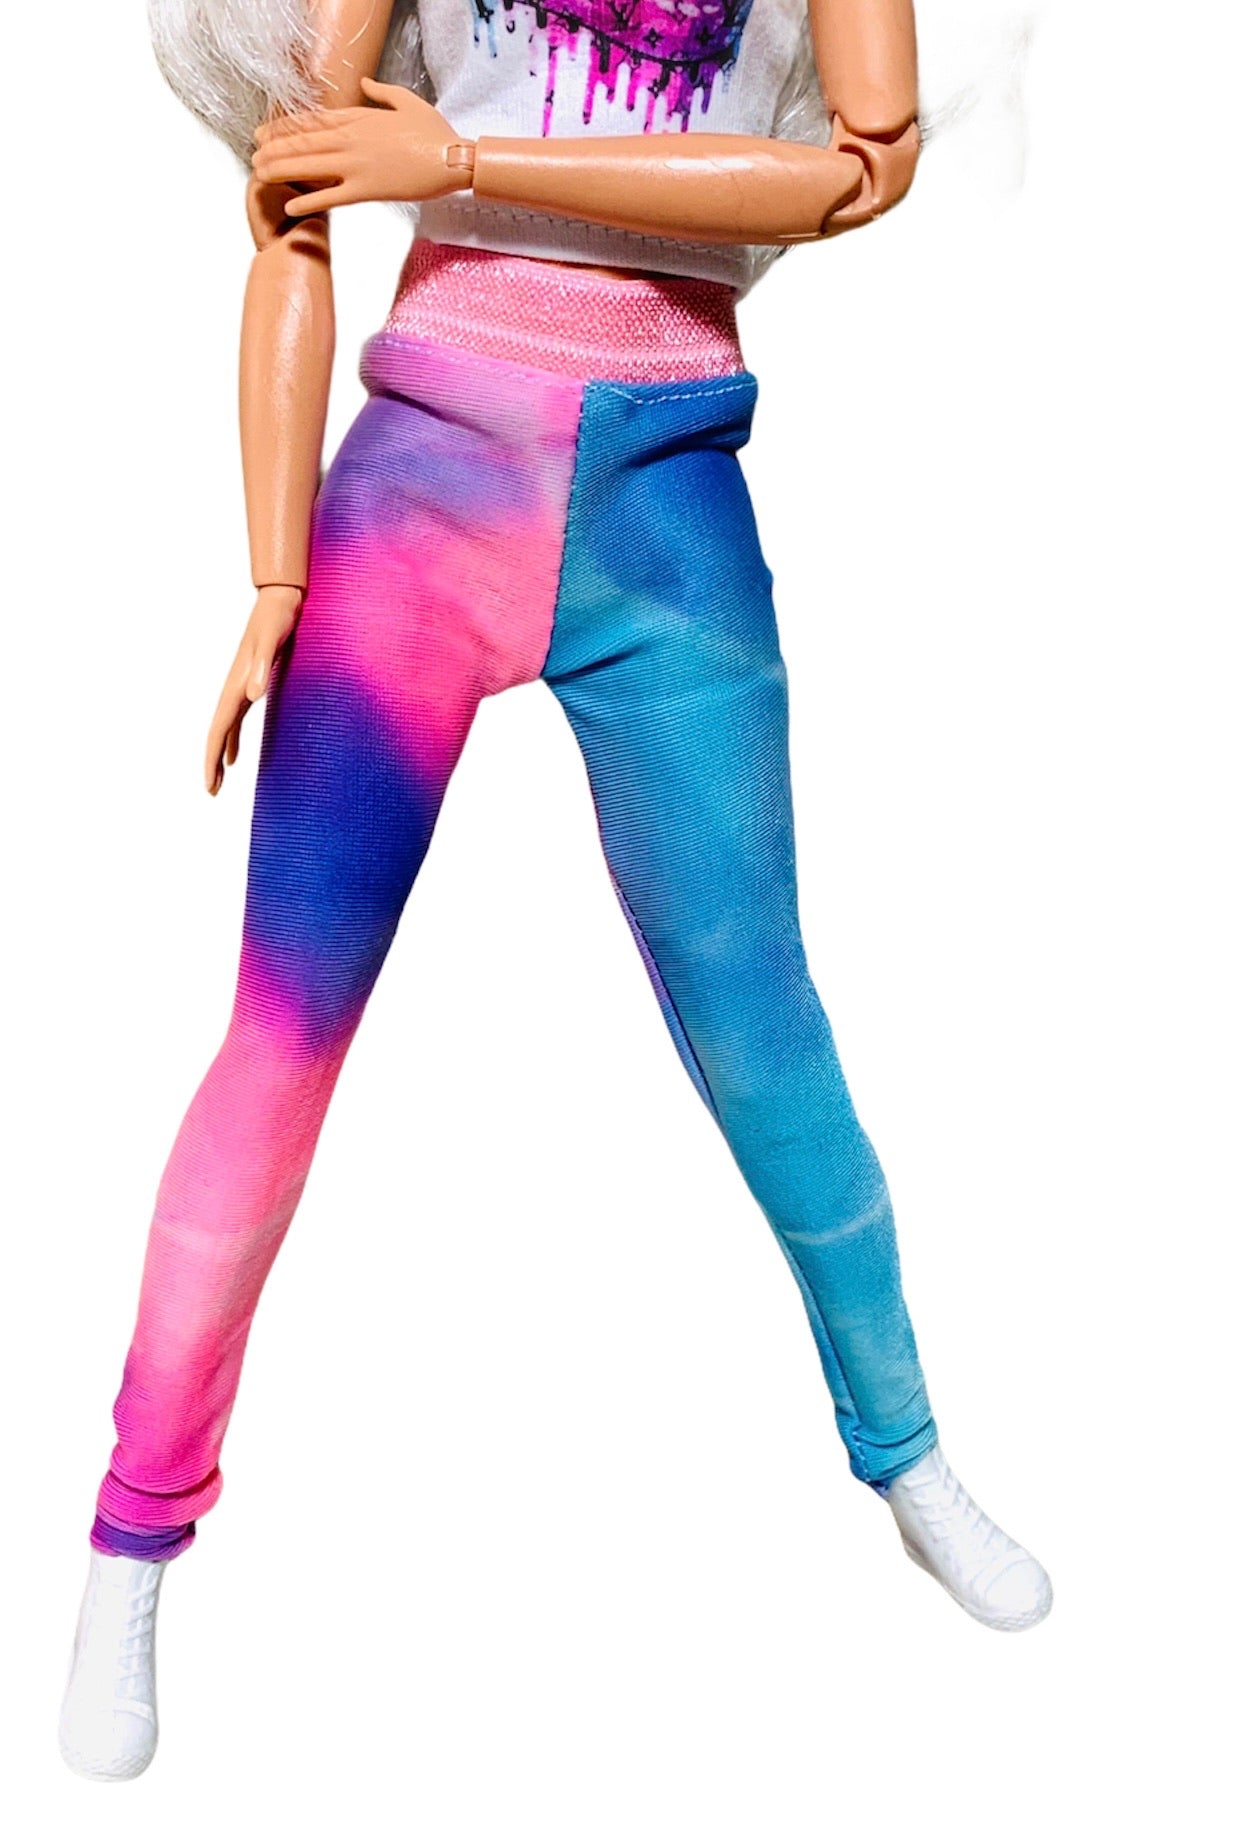 Barbie Doll Clothes Sport Pants/Leggings Outfit Plain Dark Teal